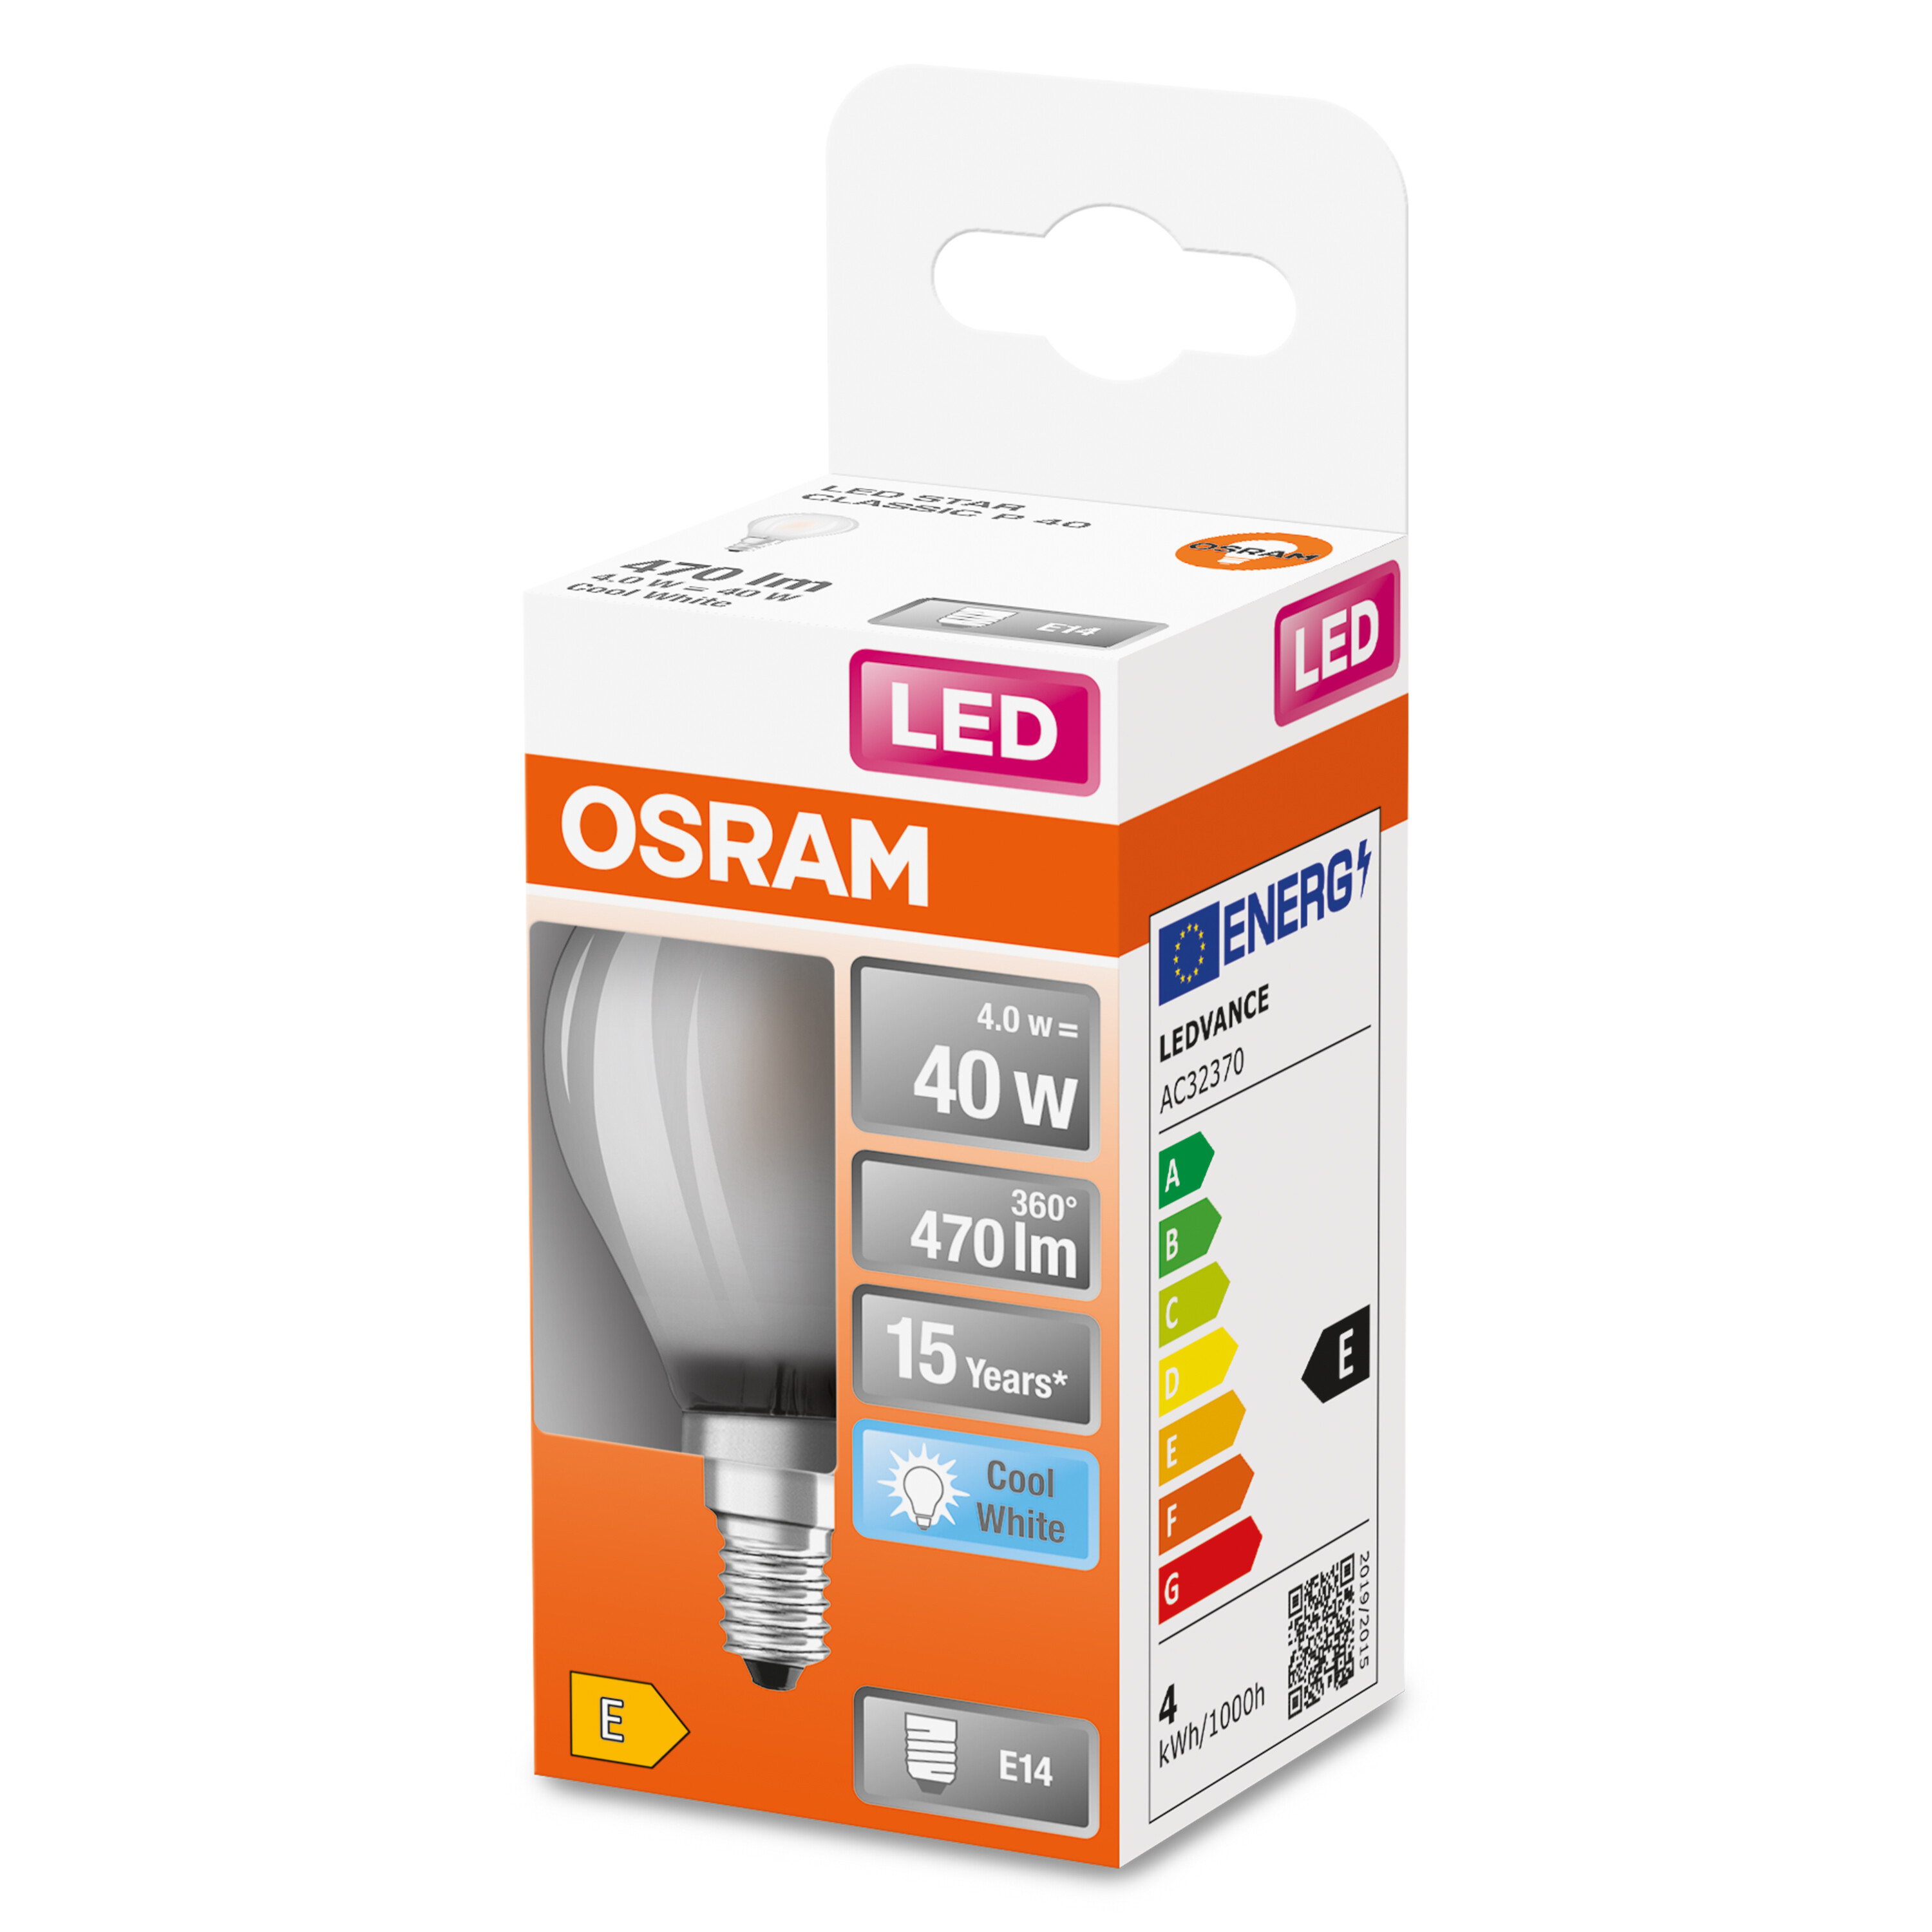 LED Kaltweiß CLASSIC OSRAM  Lampe P Lumen 470 LED Retrofit